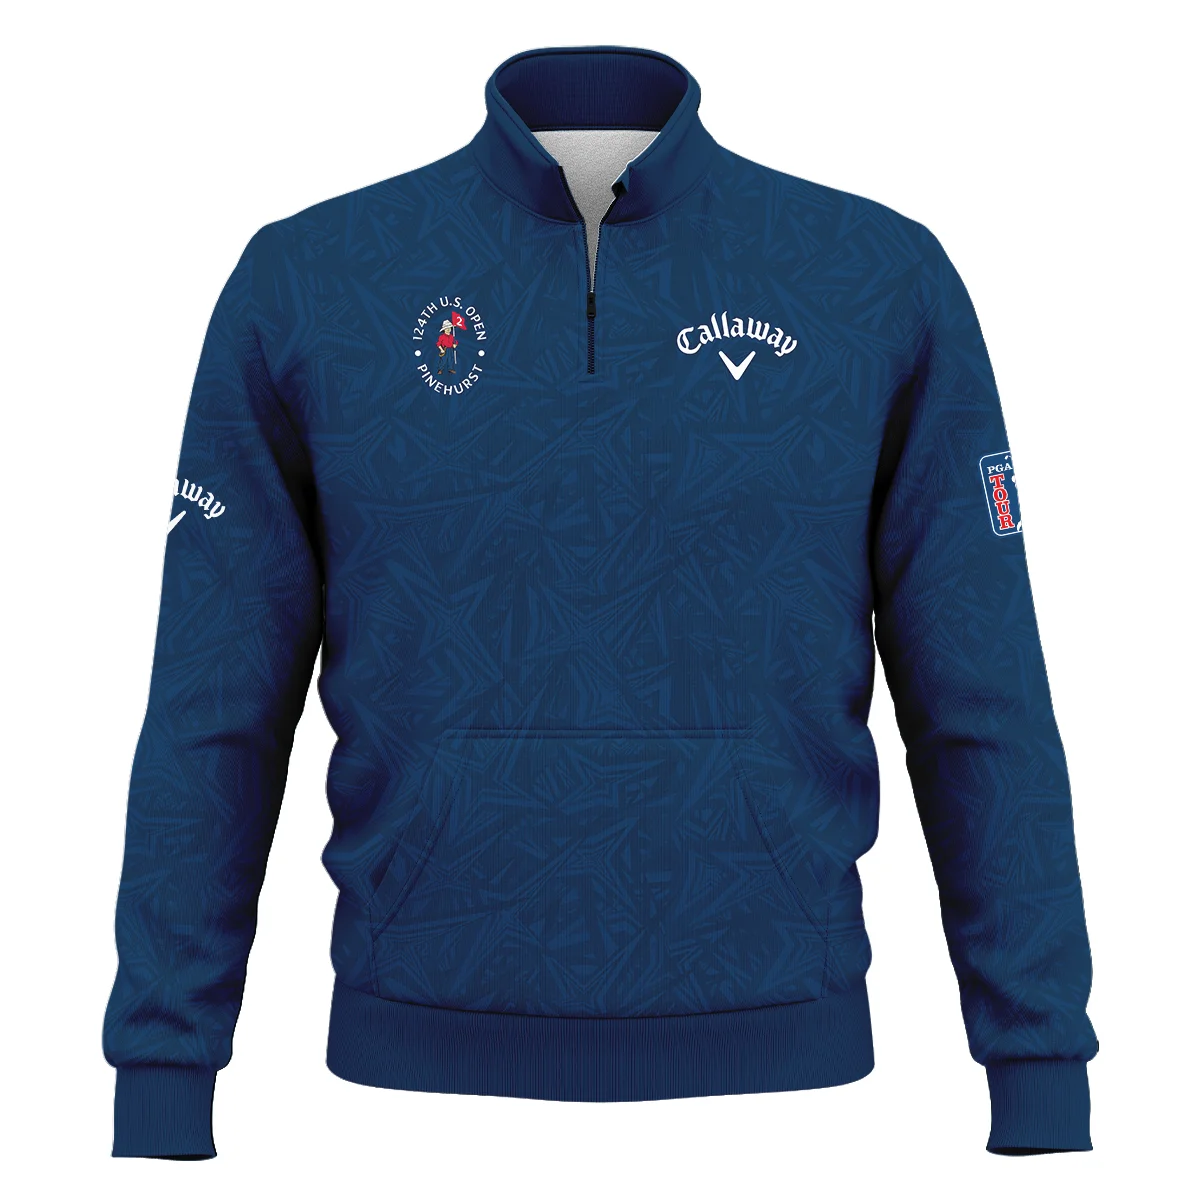 Callaway 124th U.S. Open Pinehurst Stars Gradient Pattern Dark Blue Vneck Polo Shirt Style Classic Polo Shirt For Men